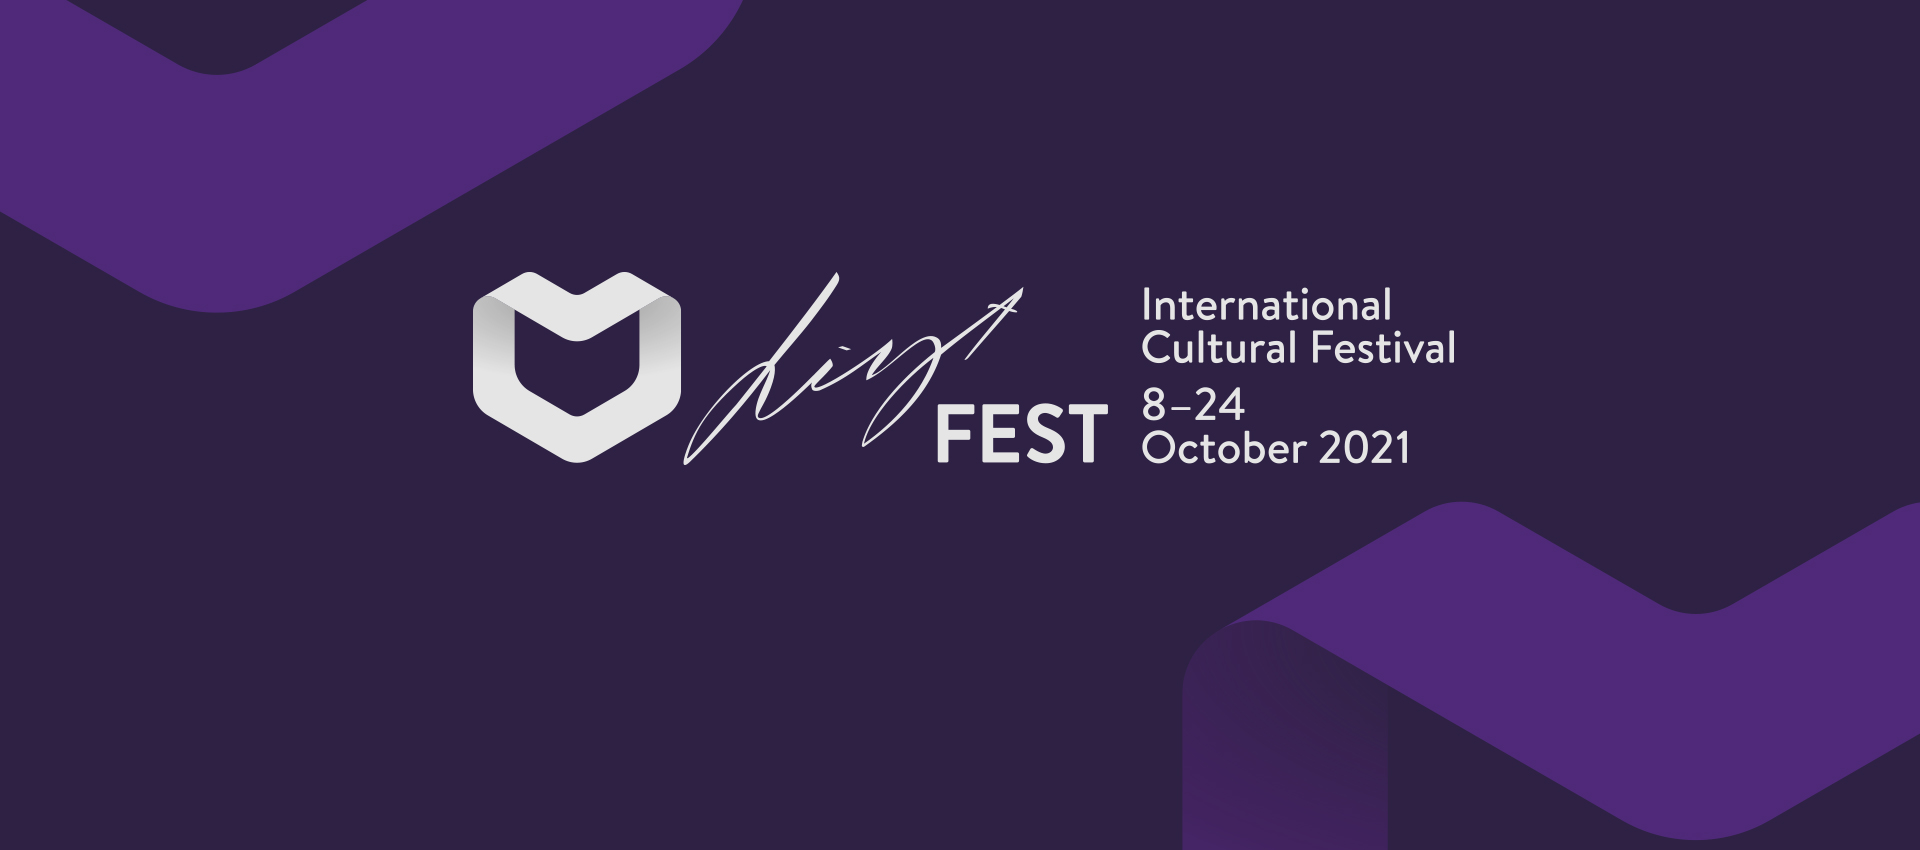 Liszt Fest International Cultural Festival @ Müpa Budapest